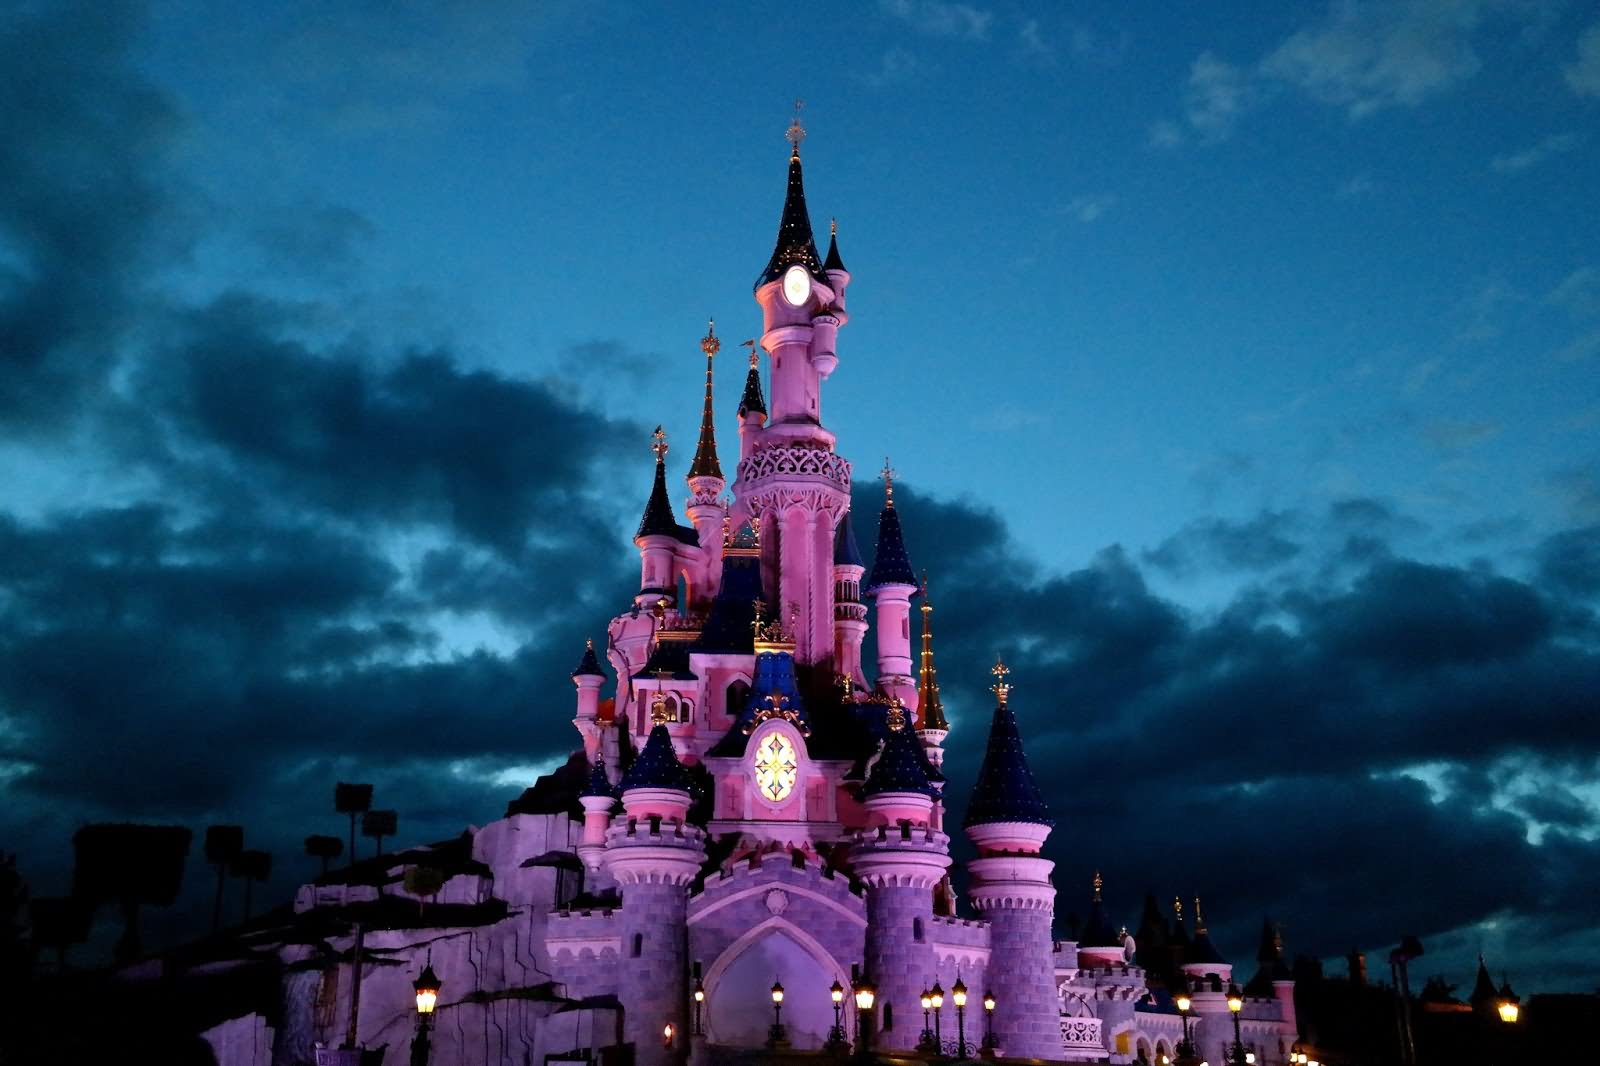 Beautiful Disneyland Paris Castle Night View Image